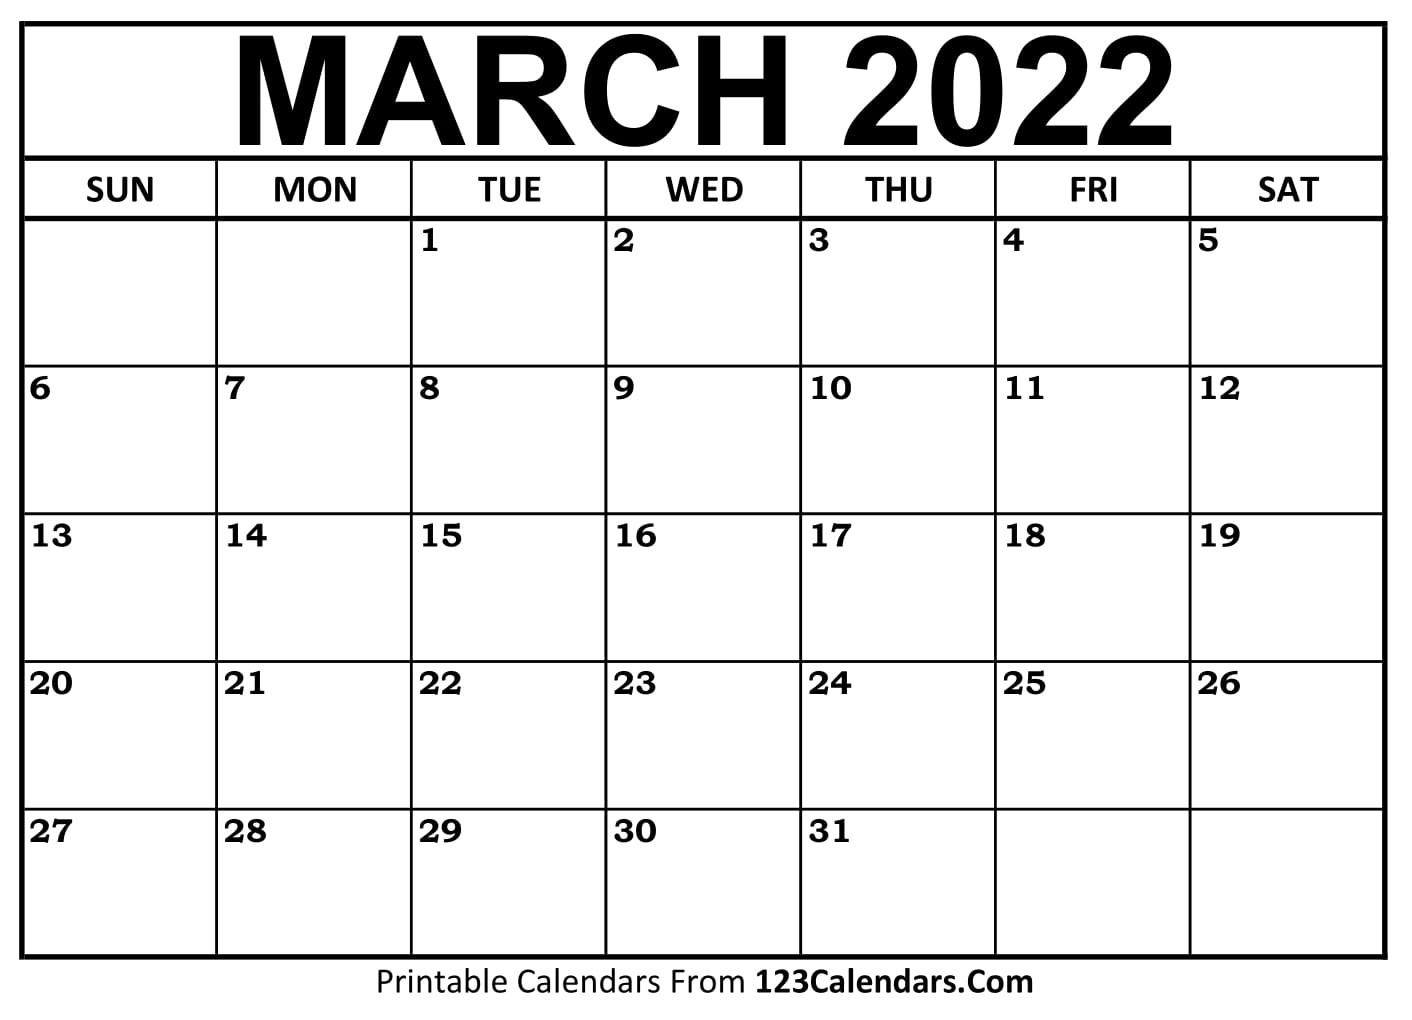 March 2022 Schedule Printable March 2022 Calendar Templates - 123Calendars.com